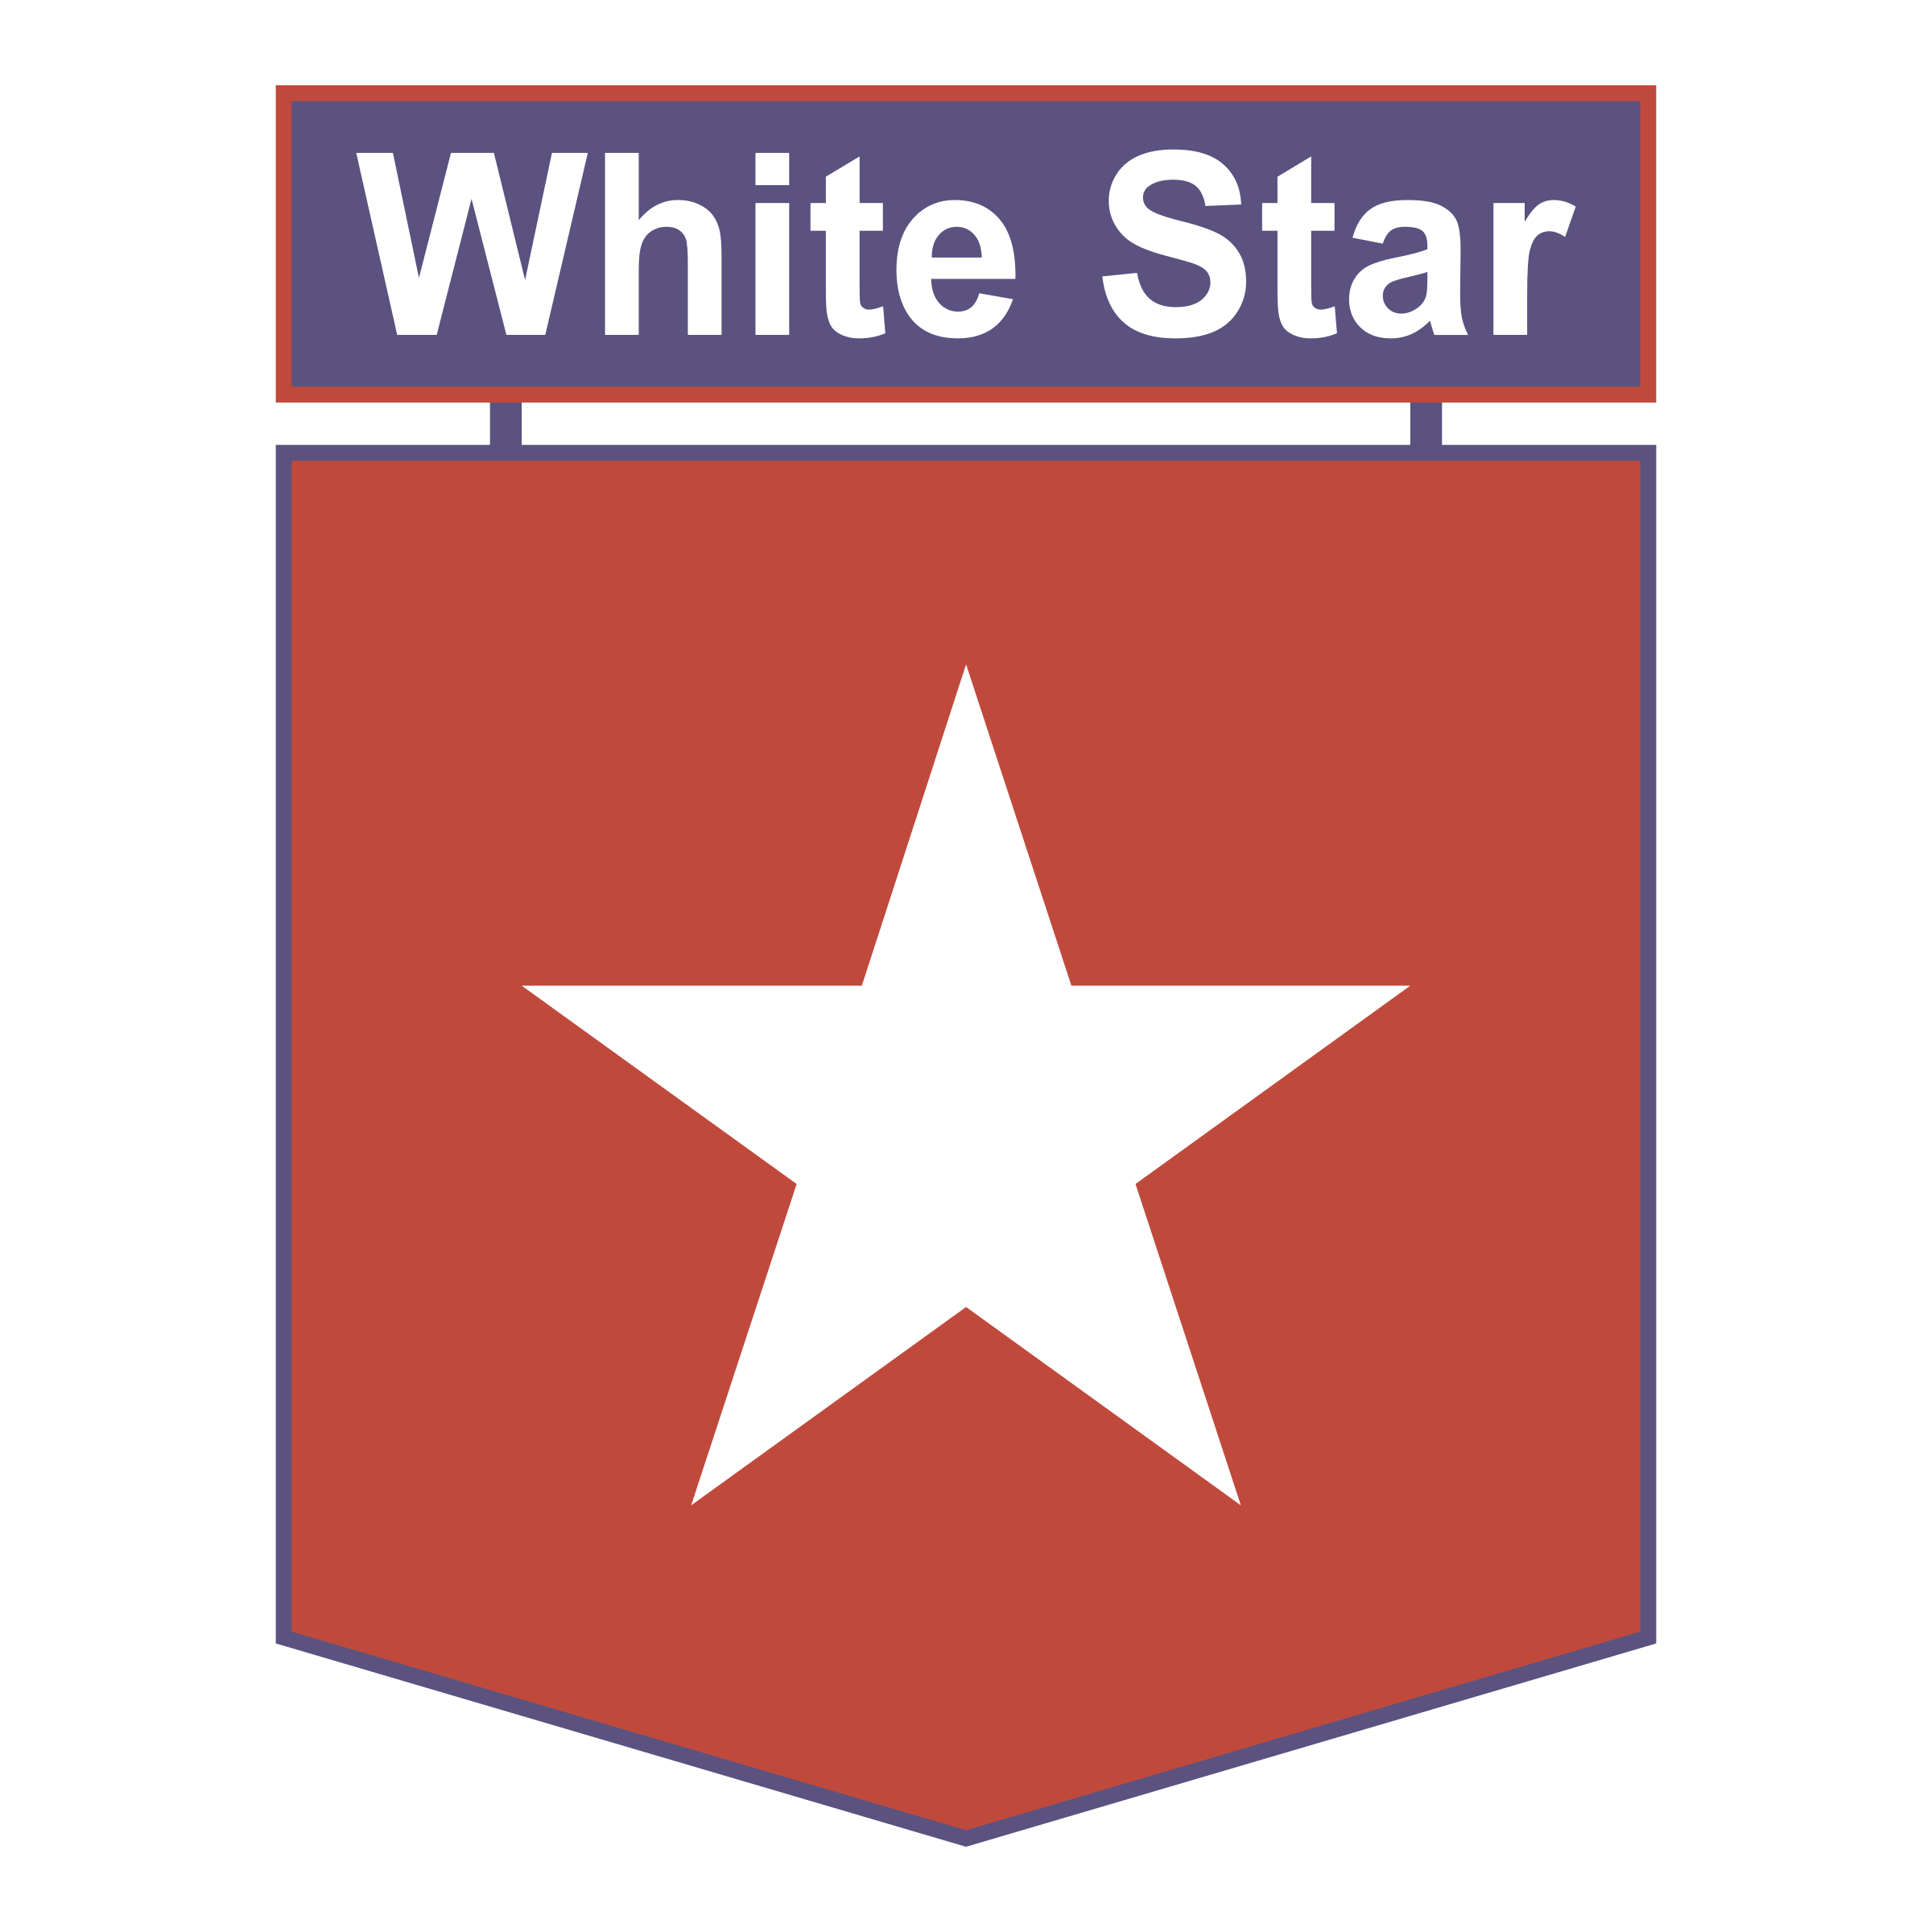 White Star Logo - White Star Logo PNG Transparent & SVG Vector - Freebie Supply